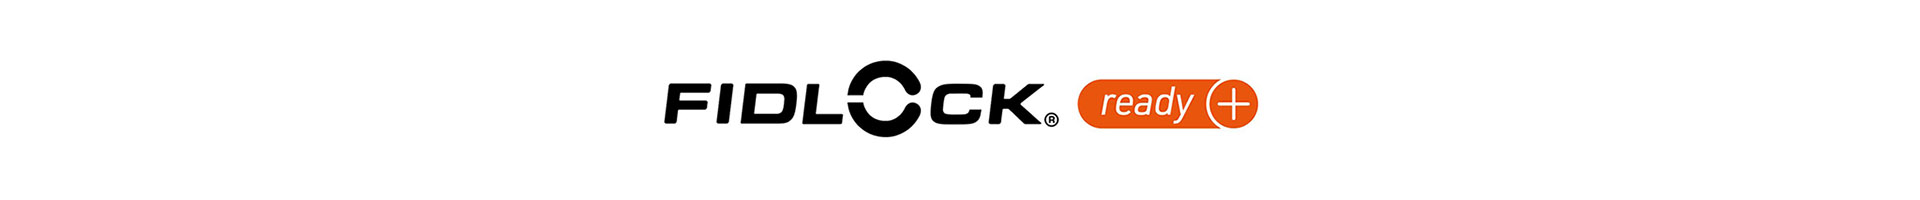 Logo FIDLOCK Ready